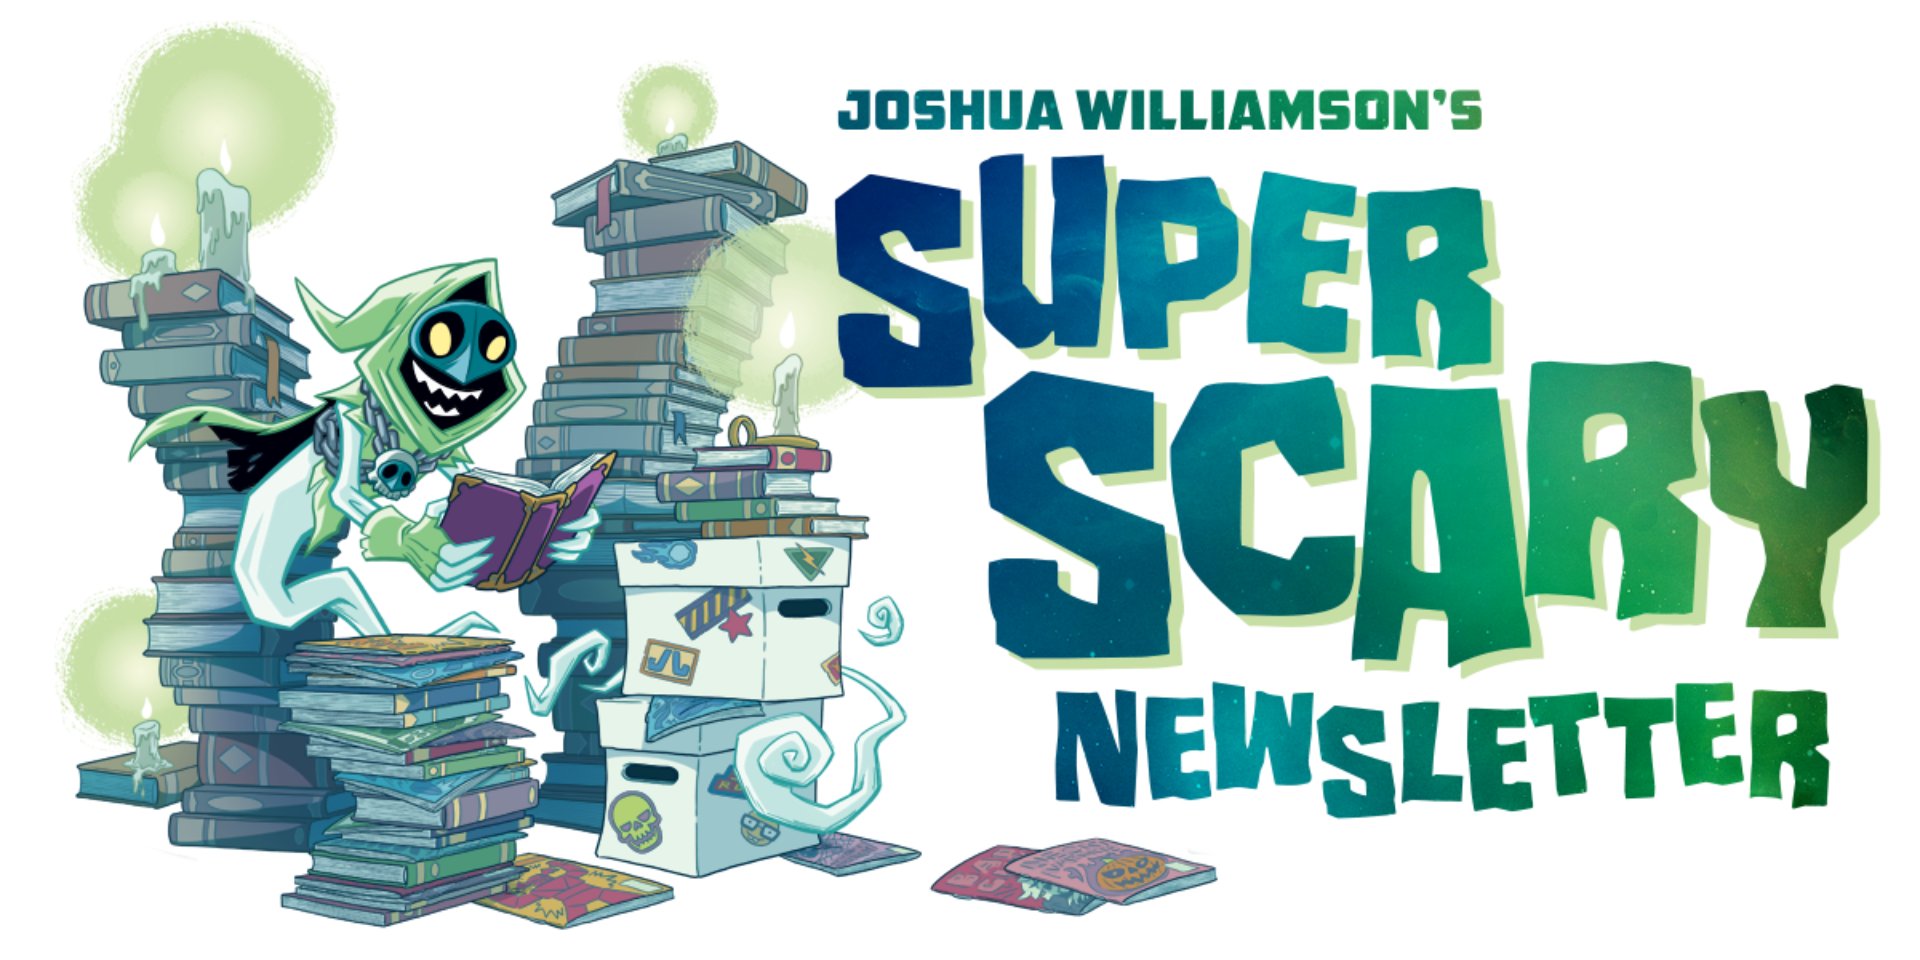 Joshua Williamsons Super Scary Newsletter-Kunst von Jason Ho